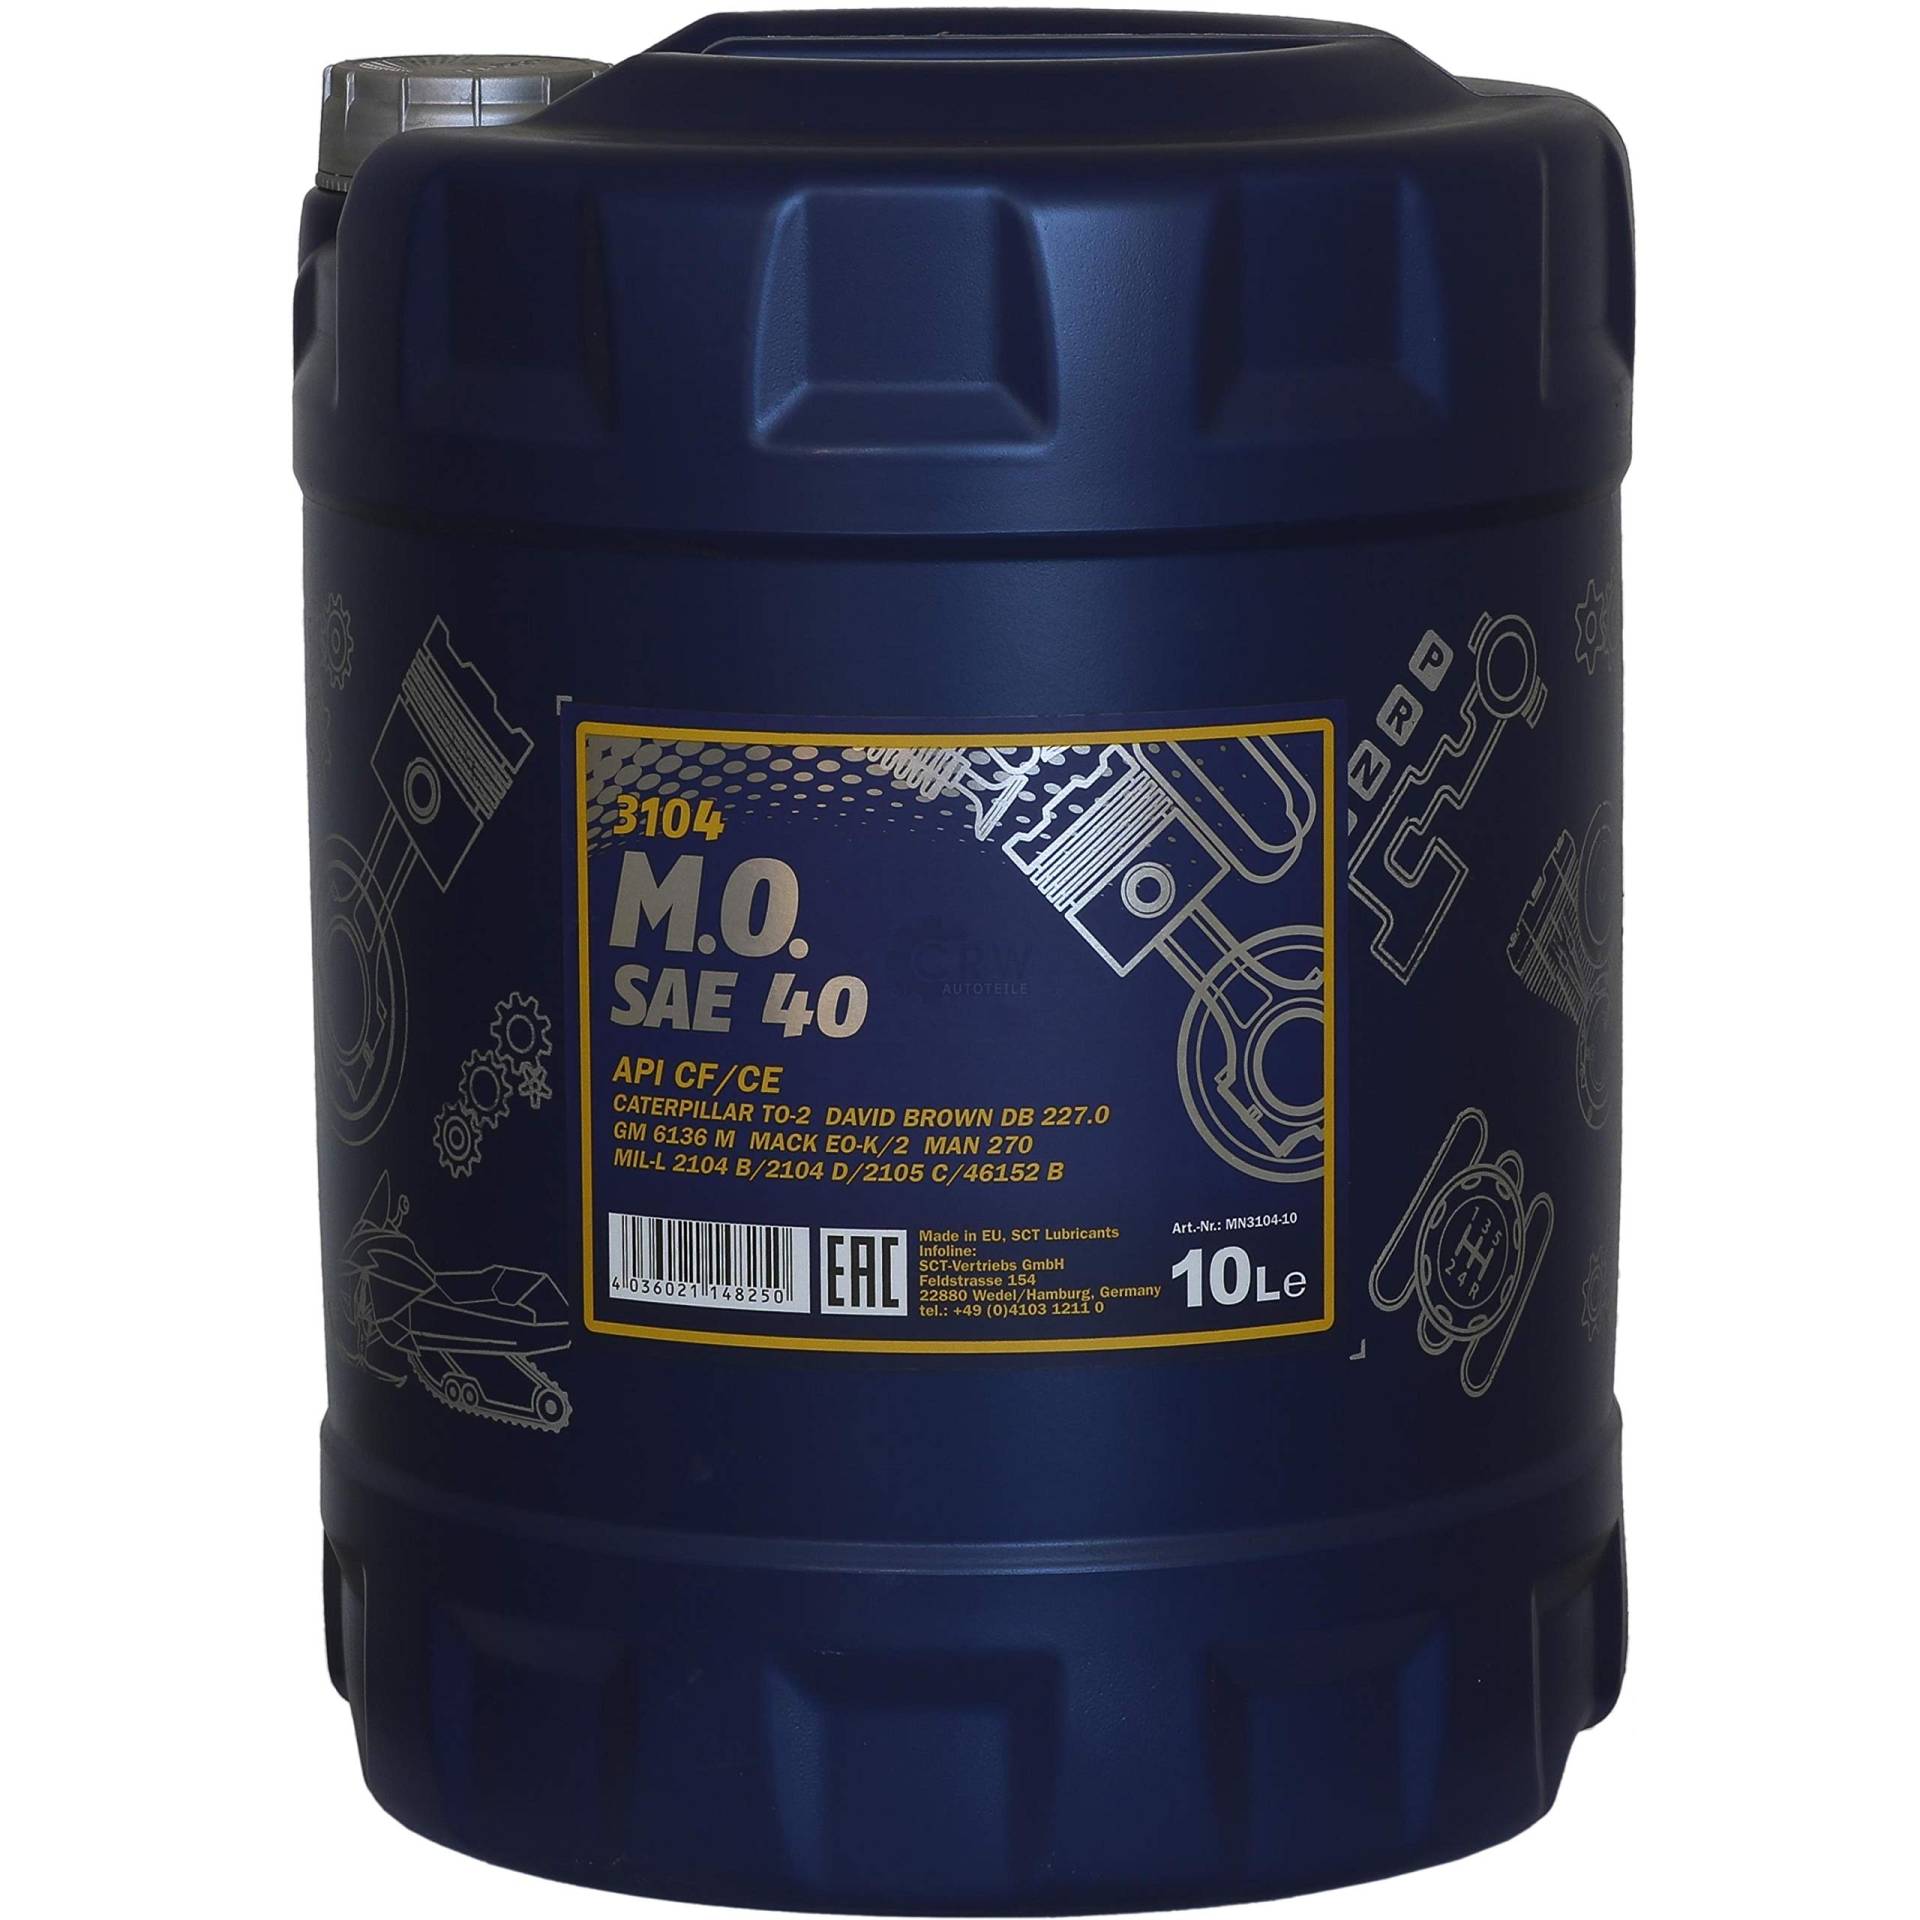 10 Liter Original MANNOL M.O. SAE 40 API CF/CE Industrieöl Oil Motoröl von MANNOL